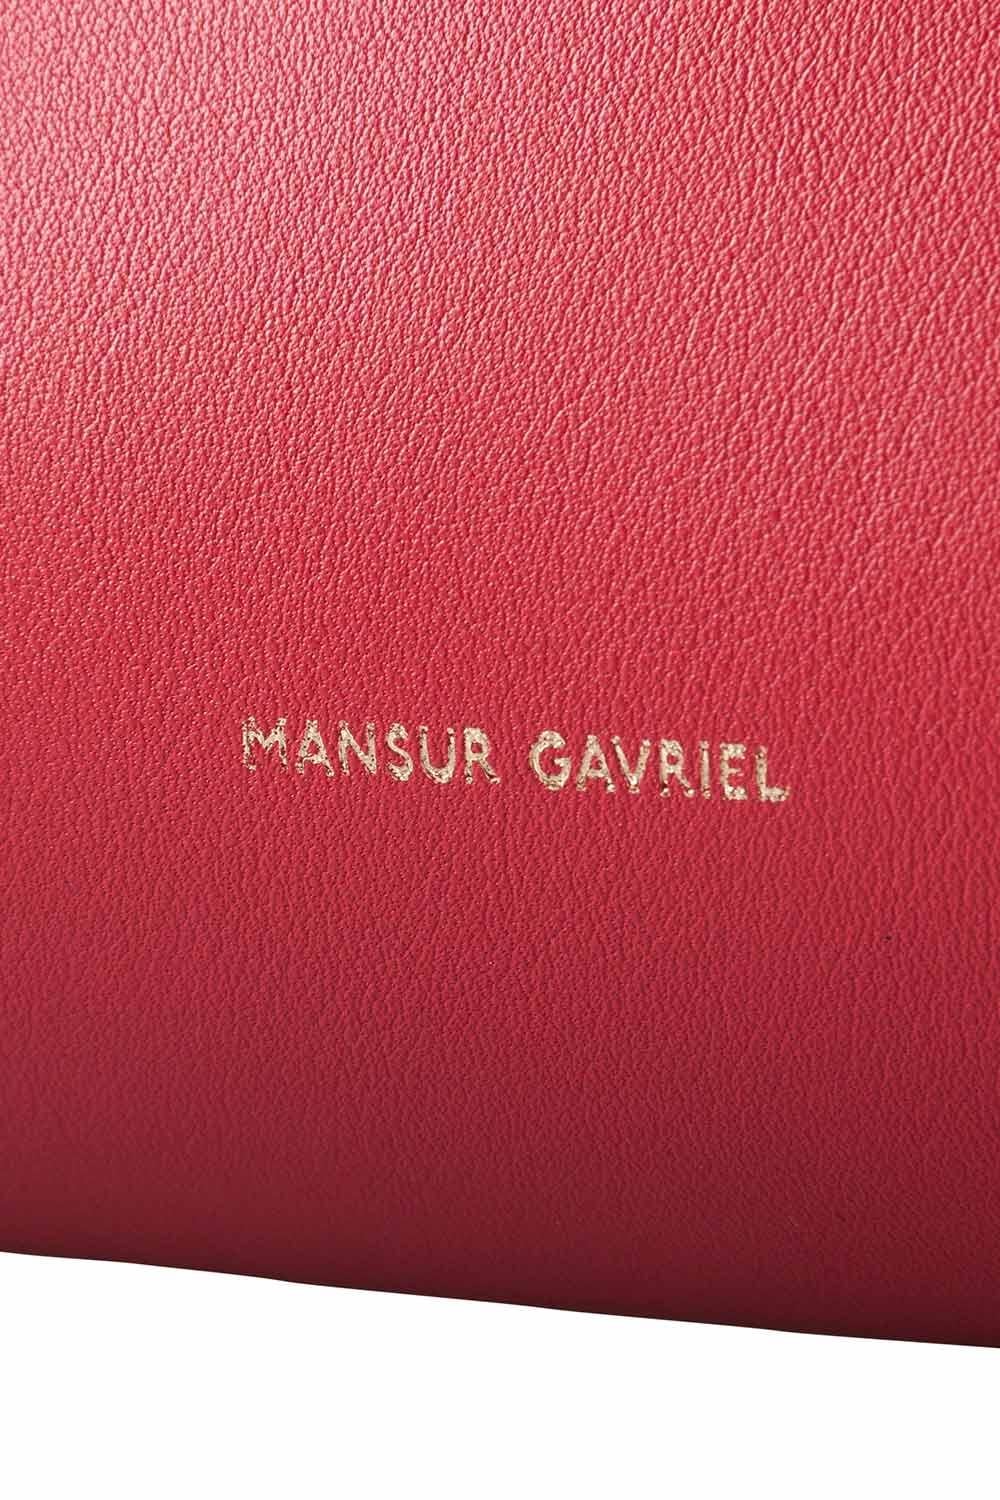 Red Mansur Gavriel Flamma/Flamma Leather Large Tote